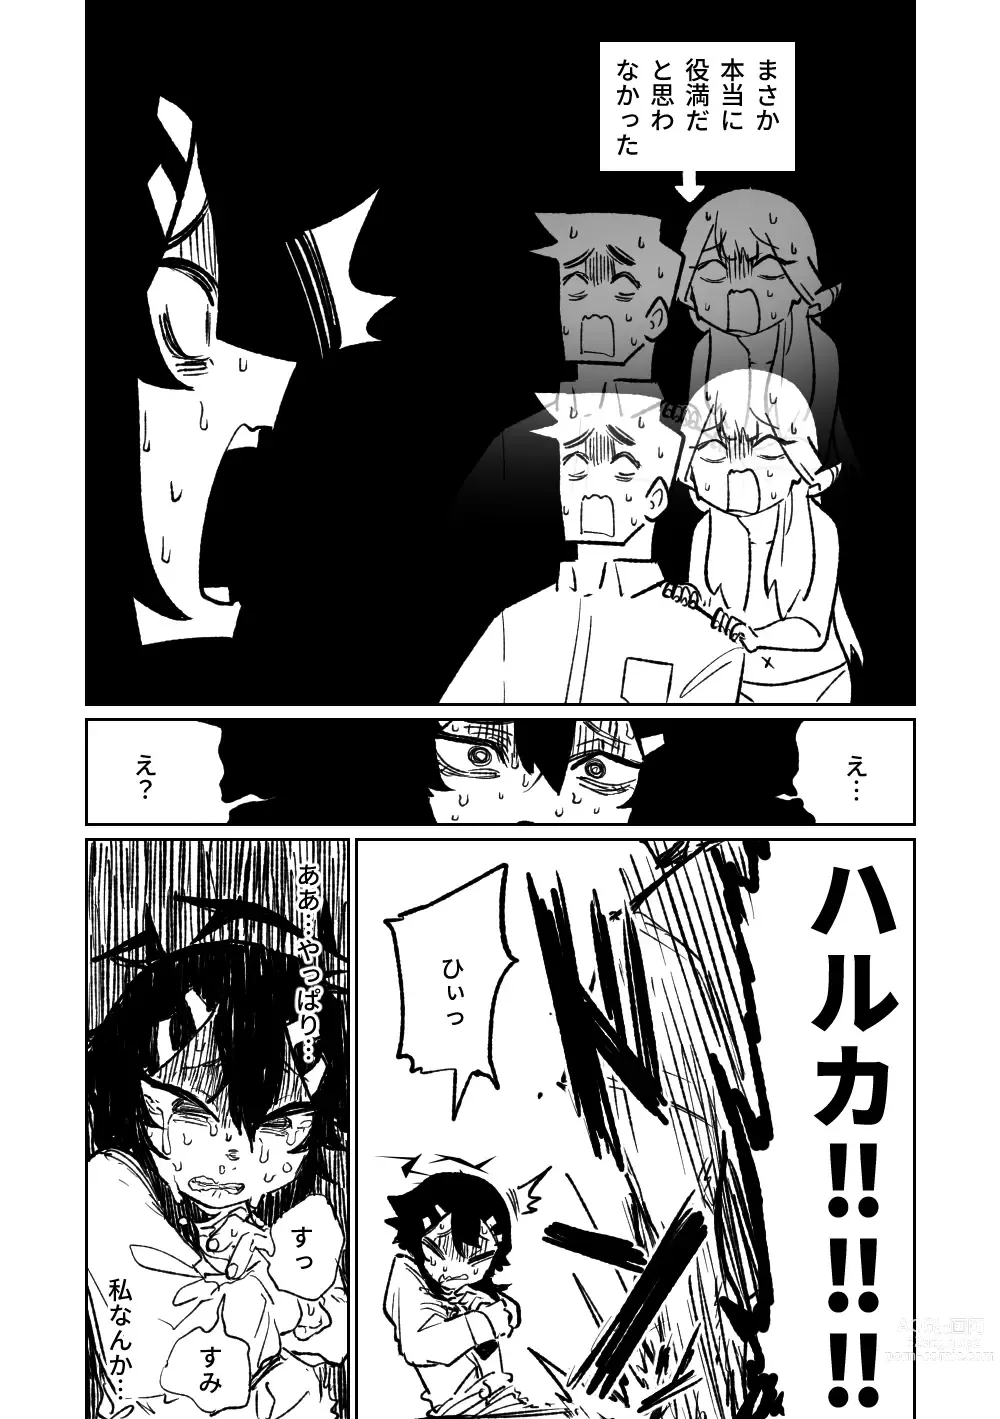 Page 194 of doujinshi Benriya 68 Datsui Mahjong Ichi ~Sankaisen~